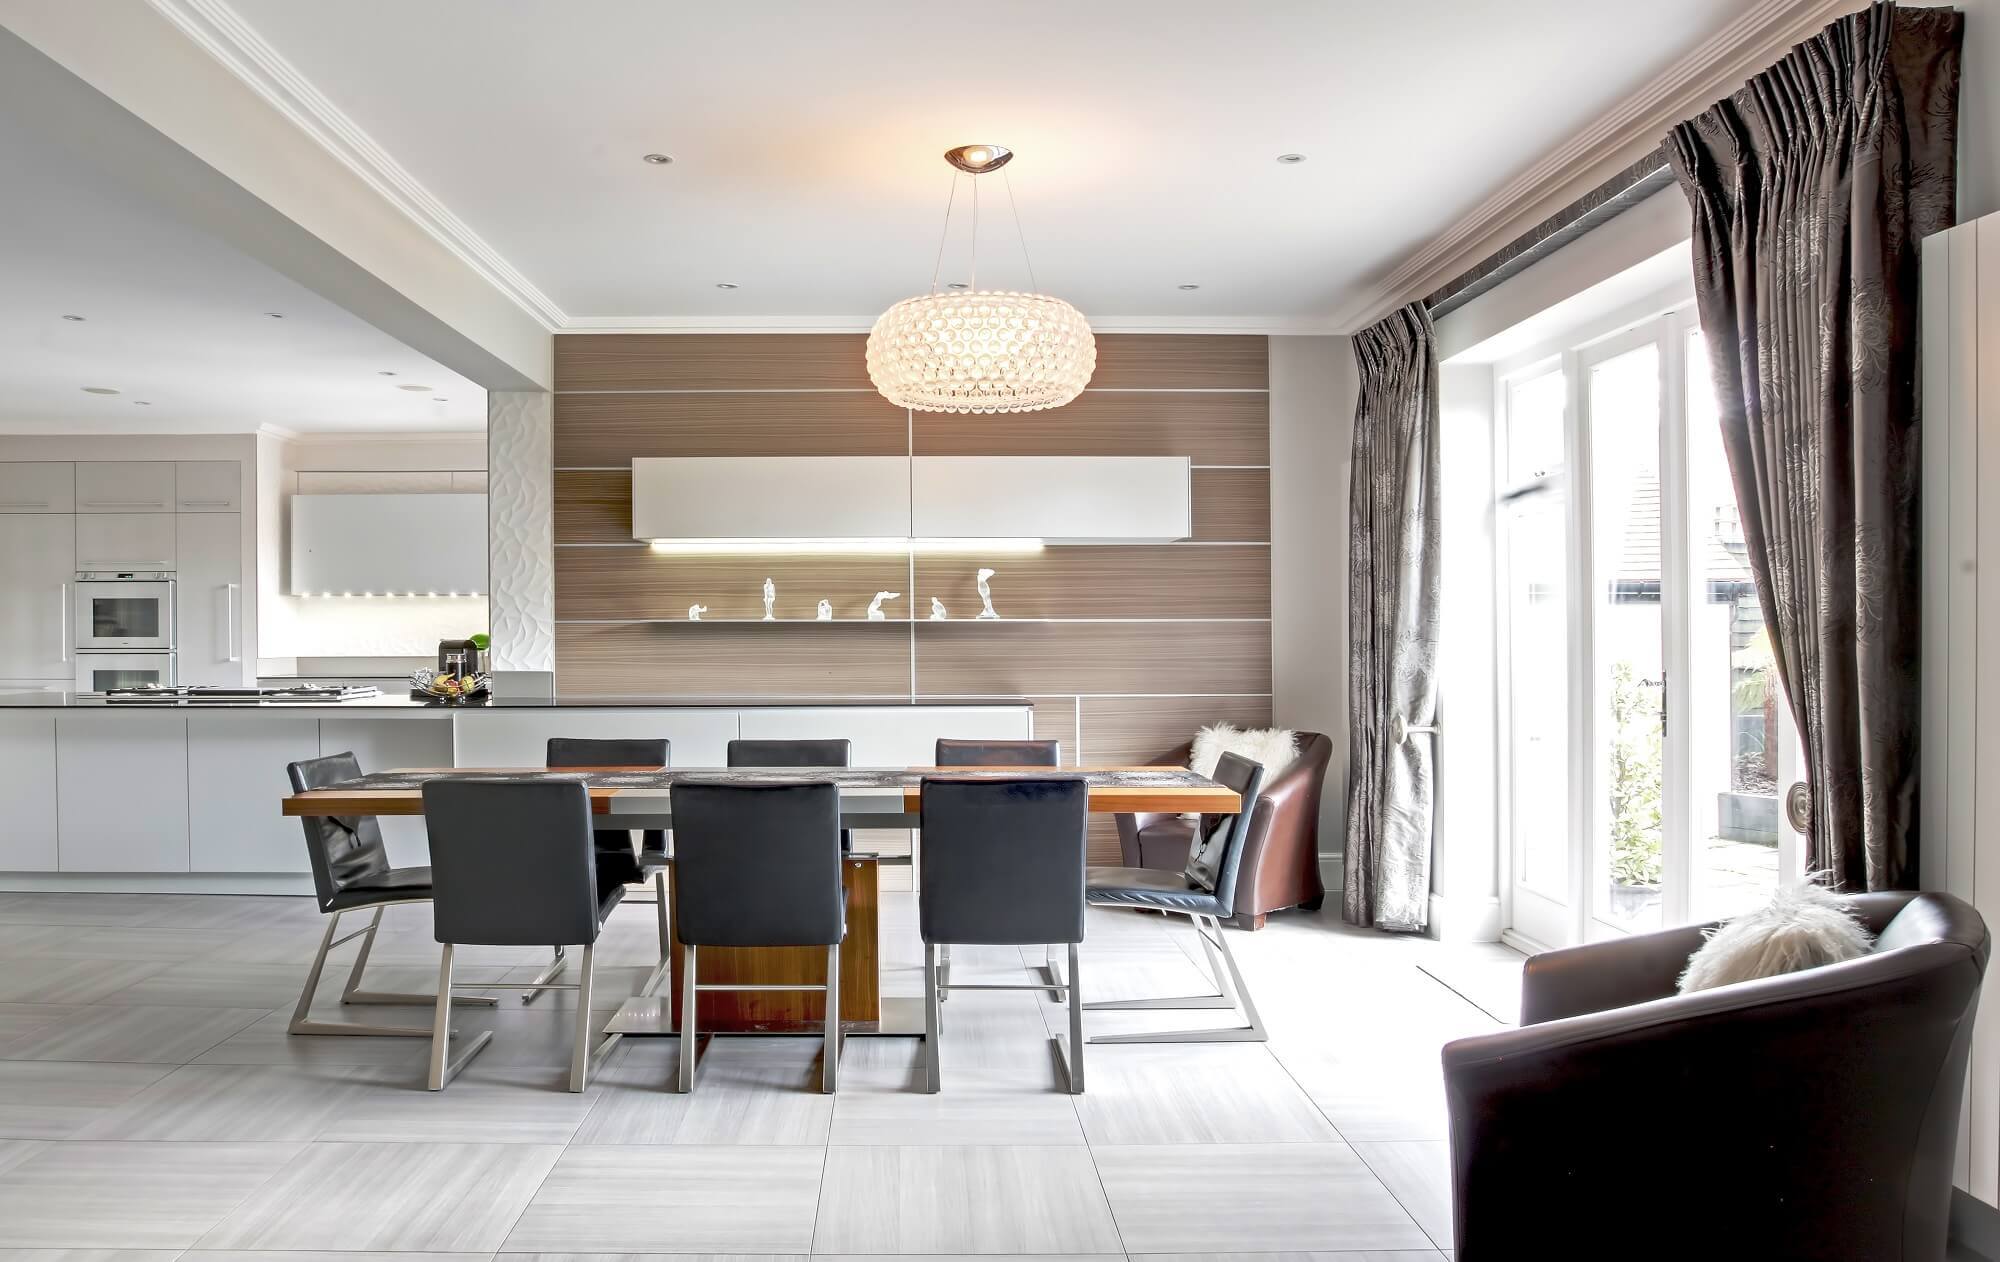 25 Dining Room Interior Design Ideas You’ll Love